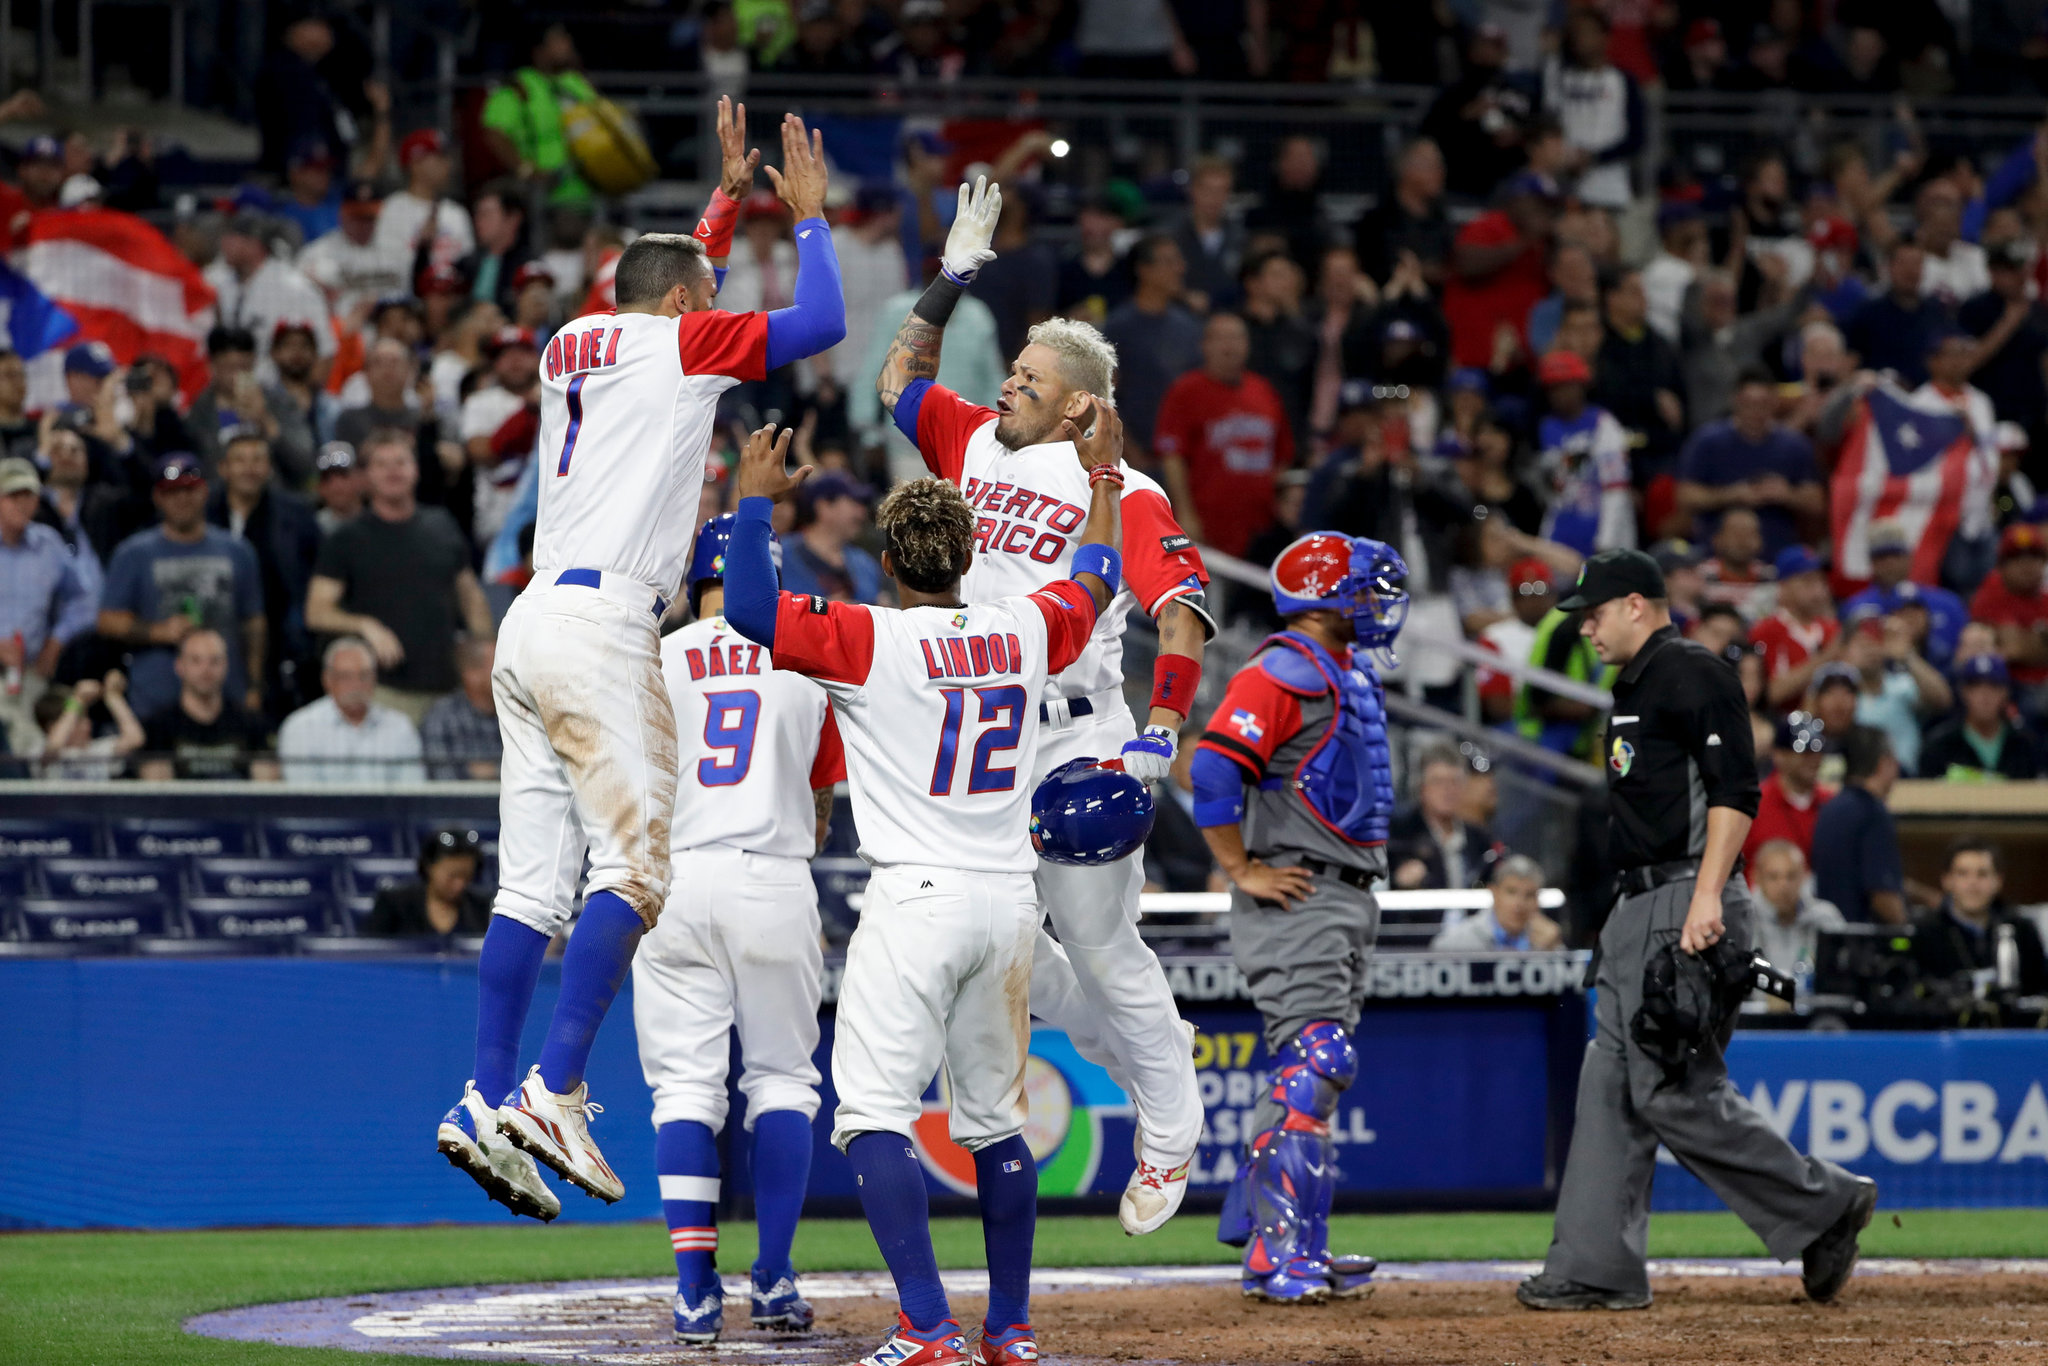 Puerto Rico Ends Dominican Republic's 11 Game Win Streak In W.B.C